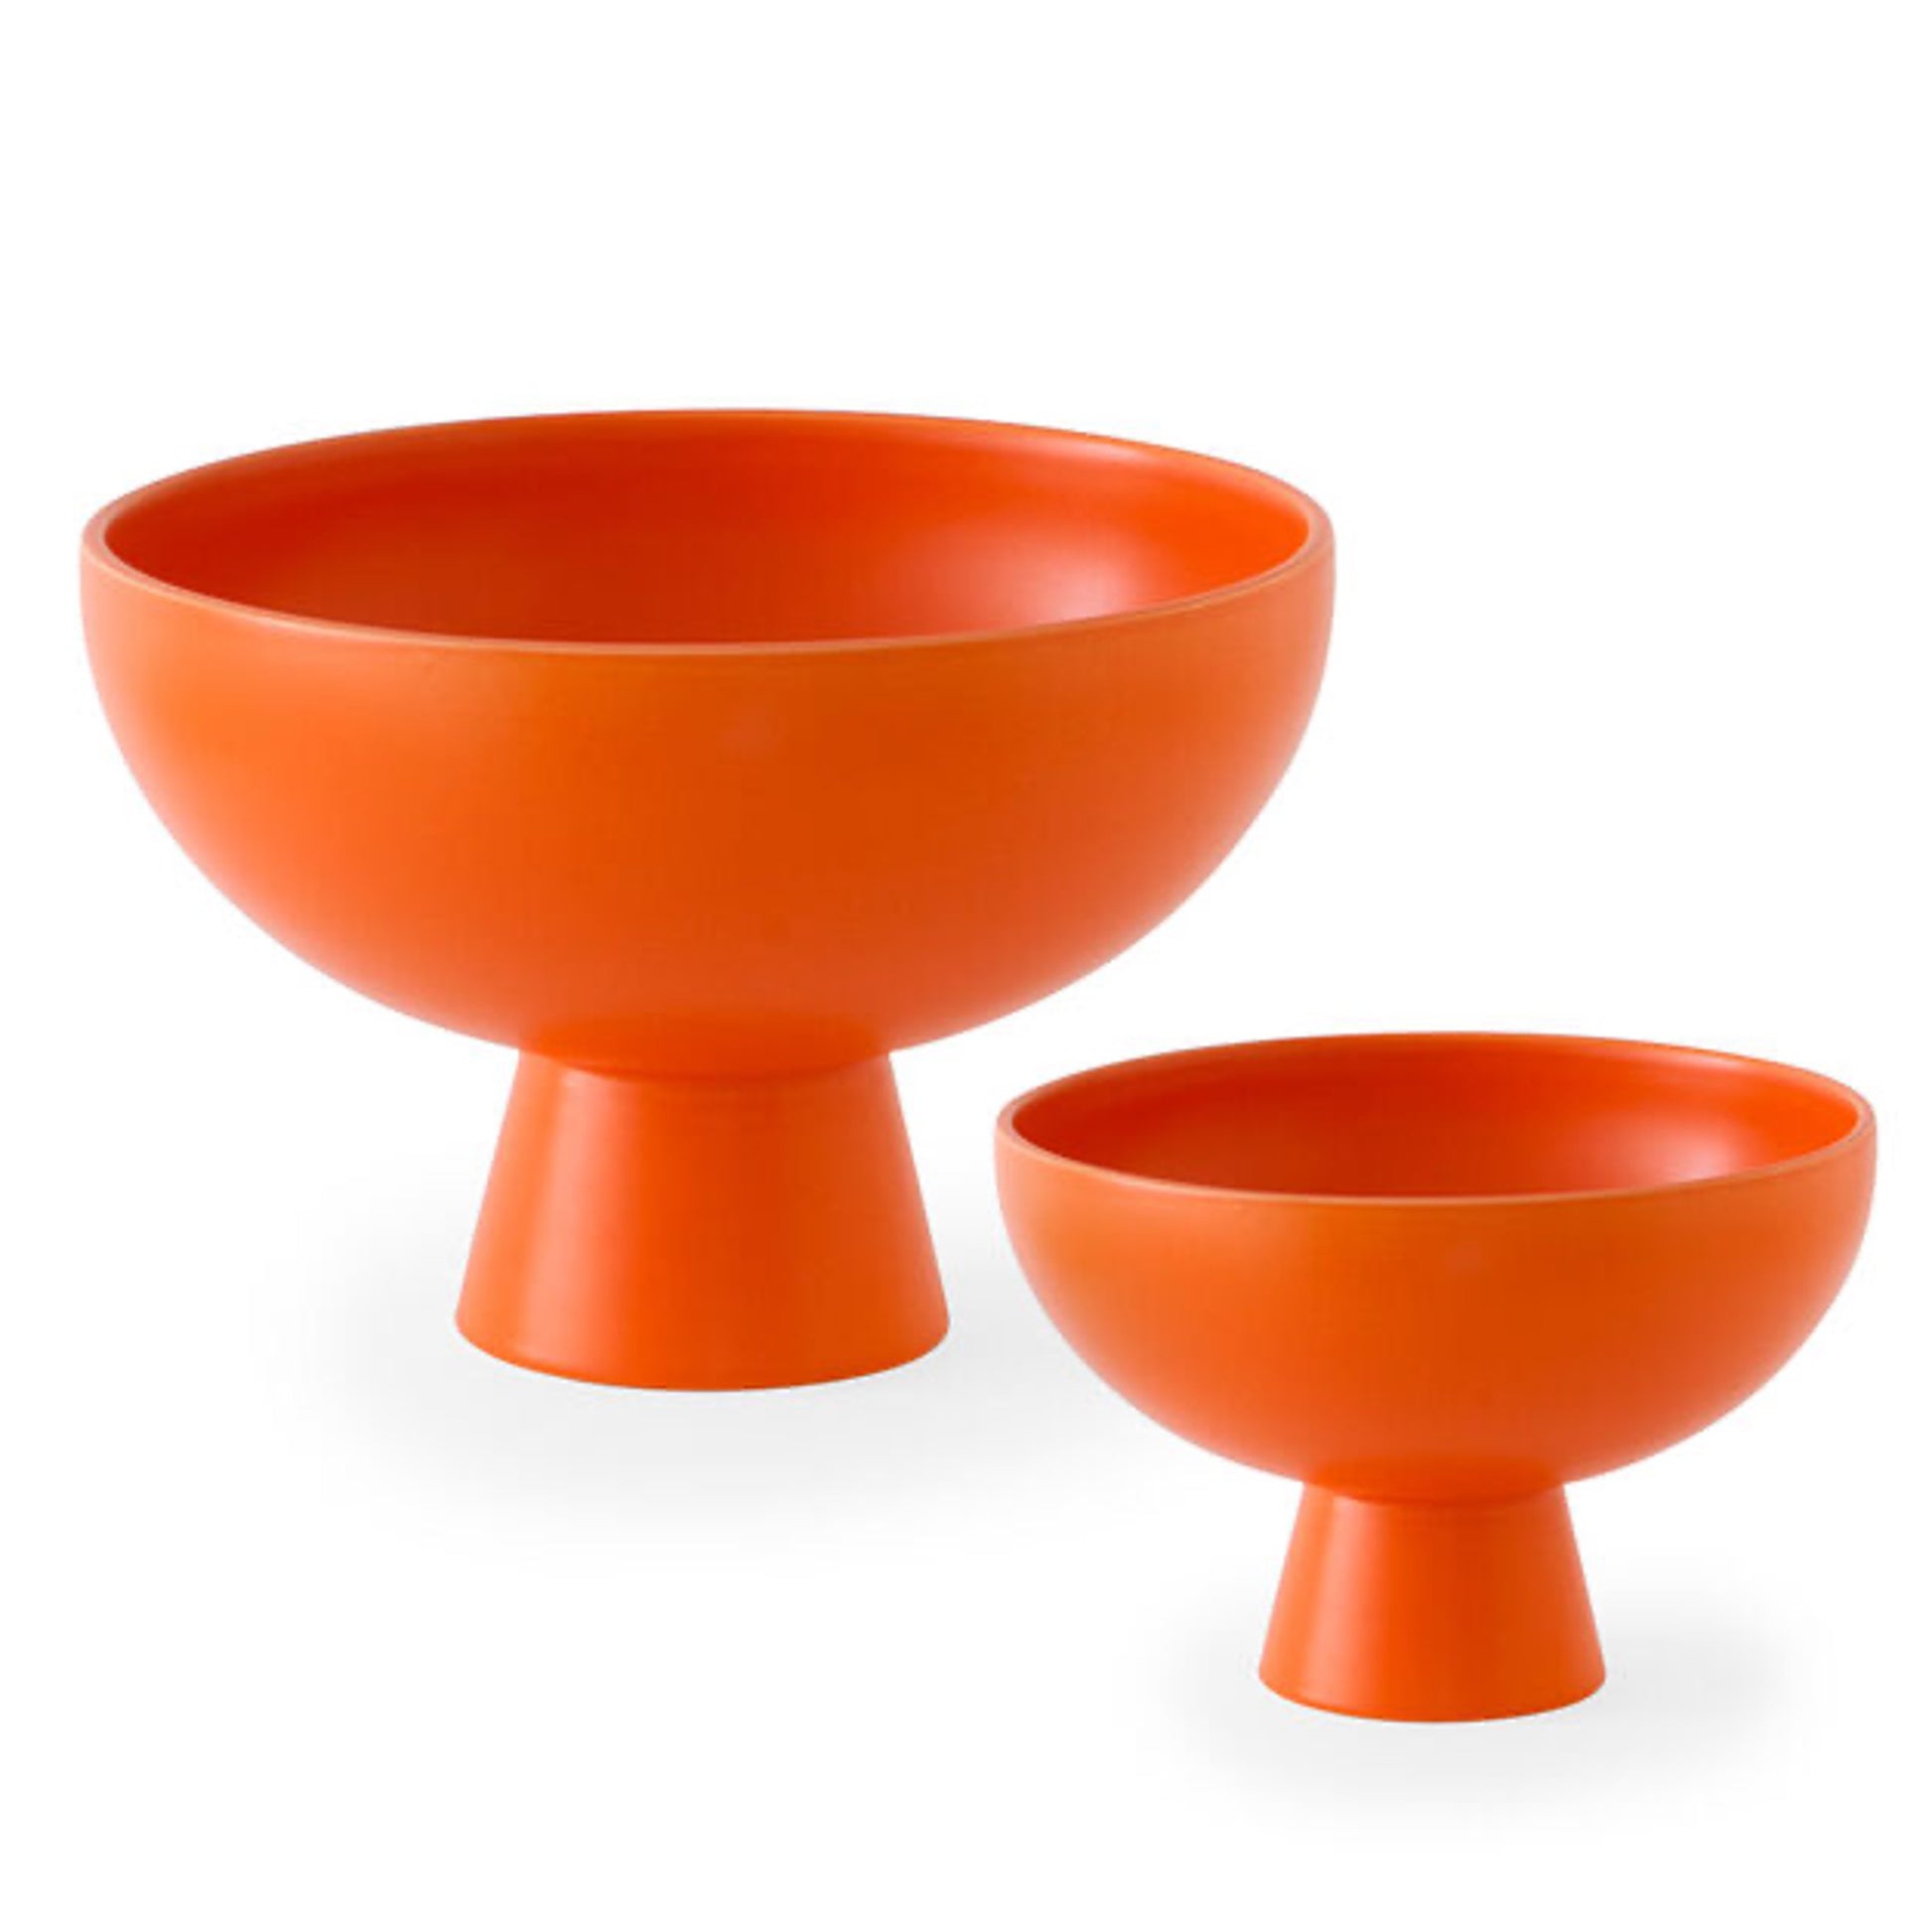 Vibrant orange modern bowl